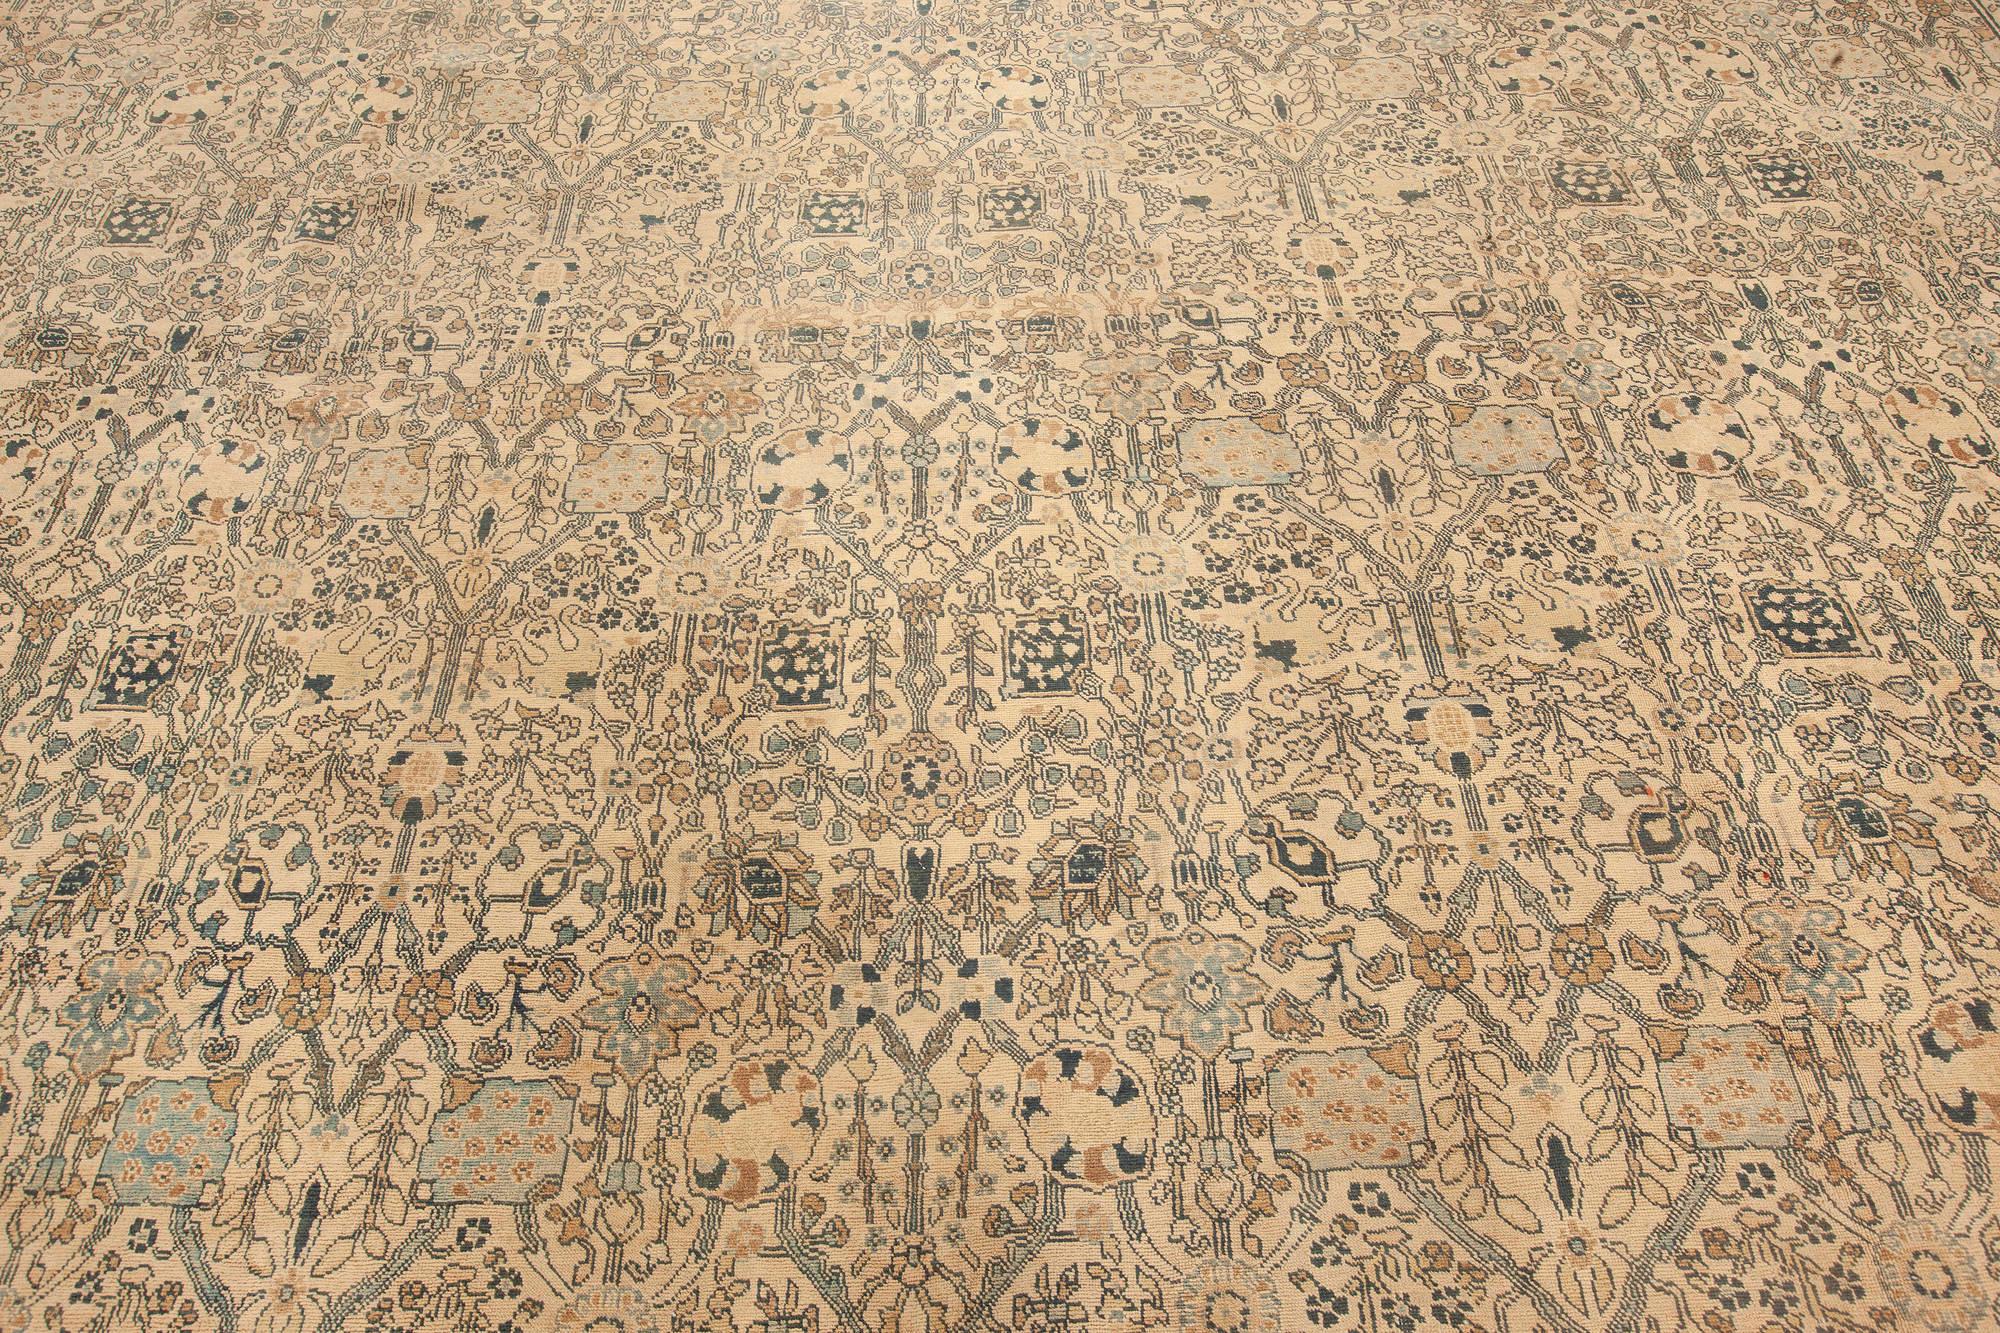 Large Antique Persian Tabriz rug
Size: 14'3